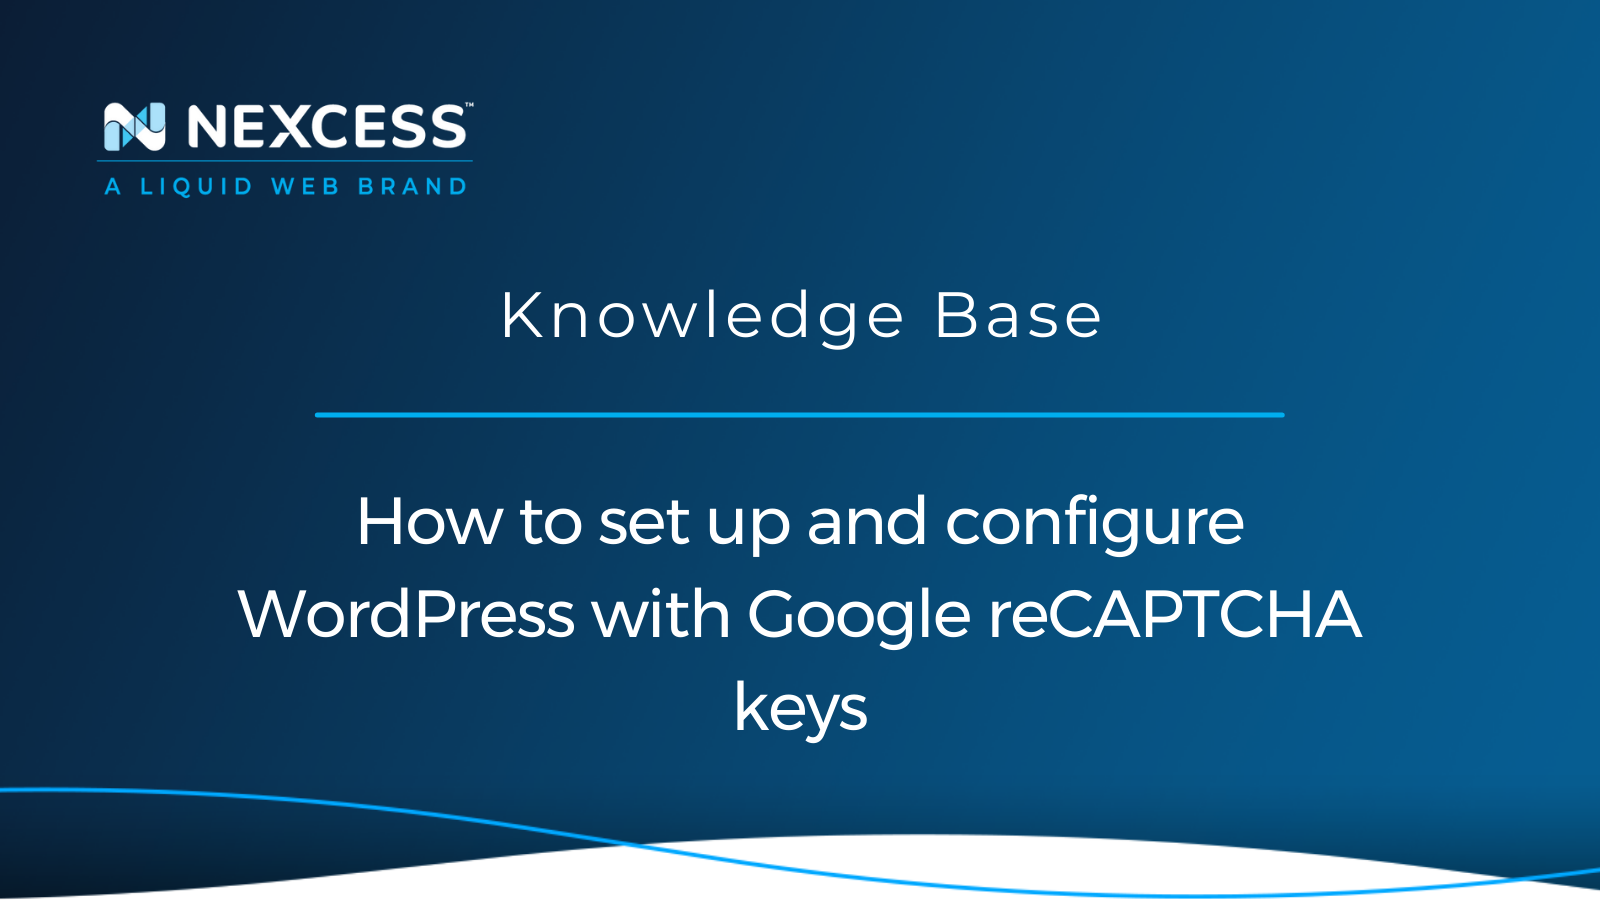 How to set up and configure WordPress with Google reCAPTCHA keys